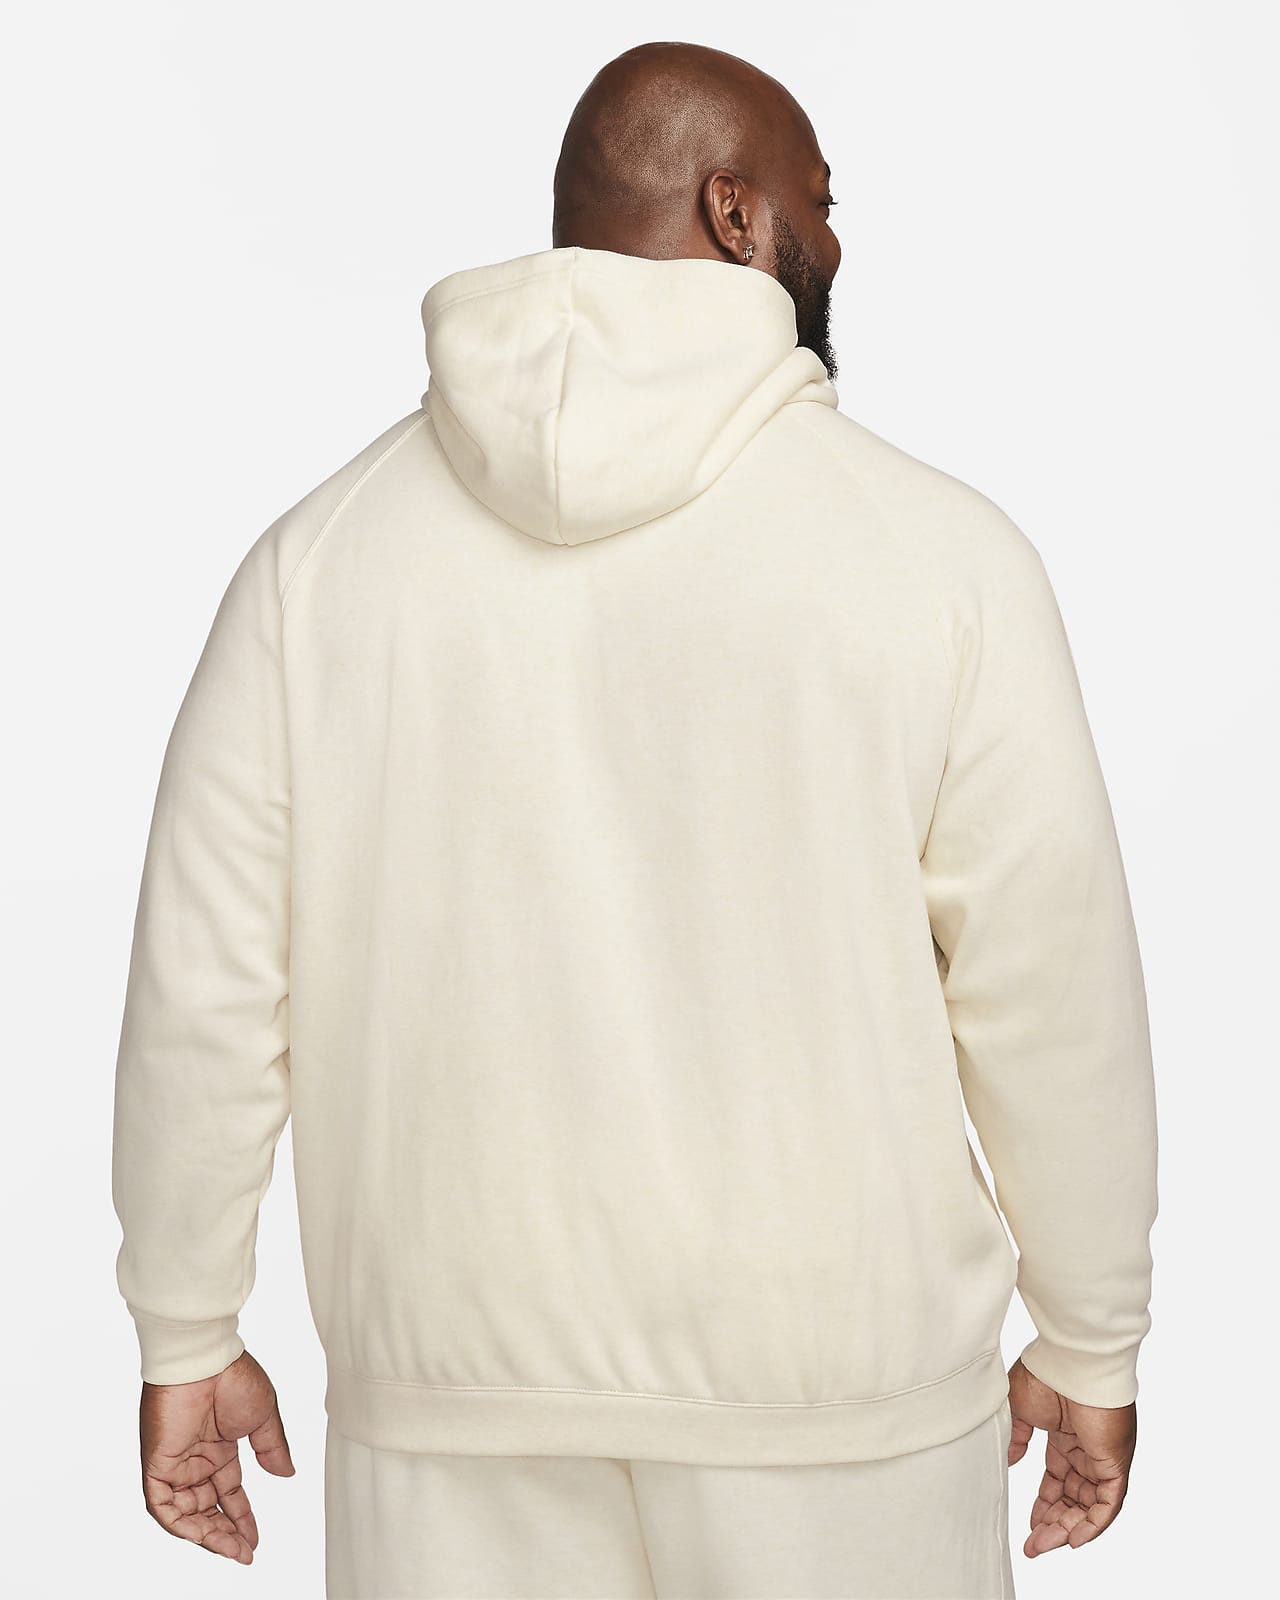 Nike LeBron Men's Pullover Fleece Hoodie